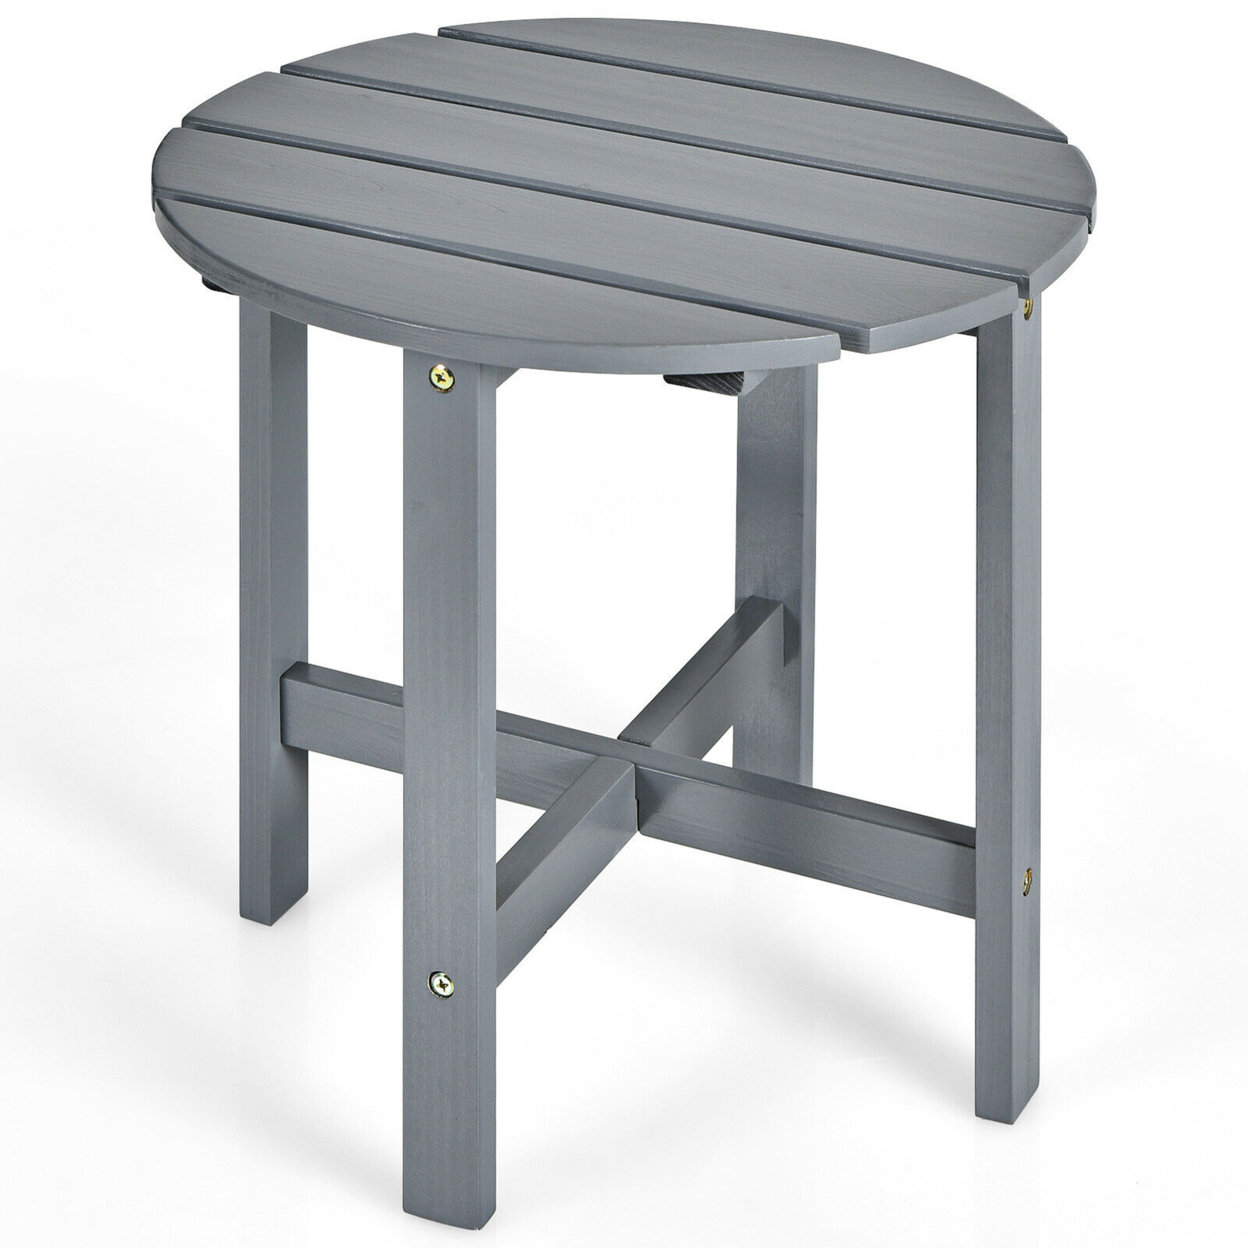 18'' Patio Round Side End Coffee Table Wooden Slat Garden Deck - Grey